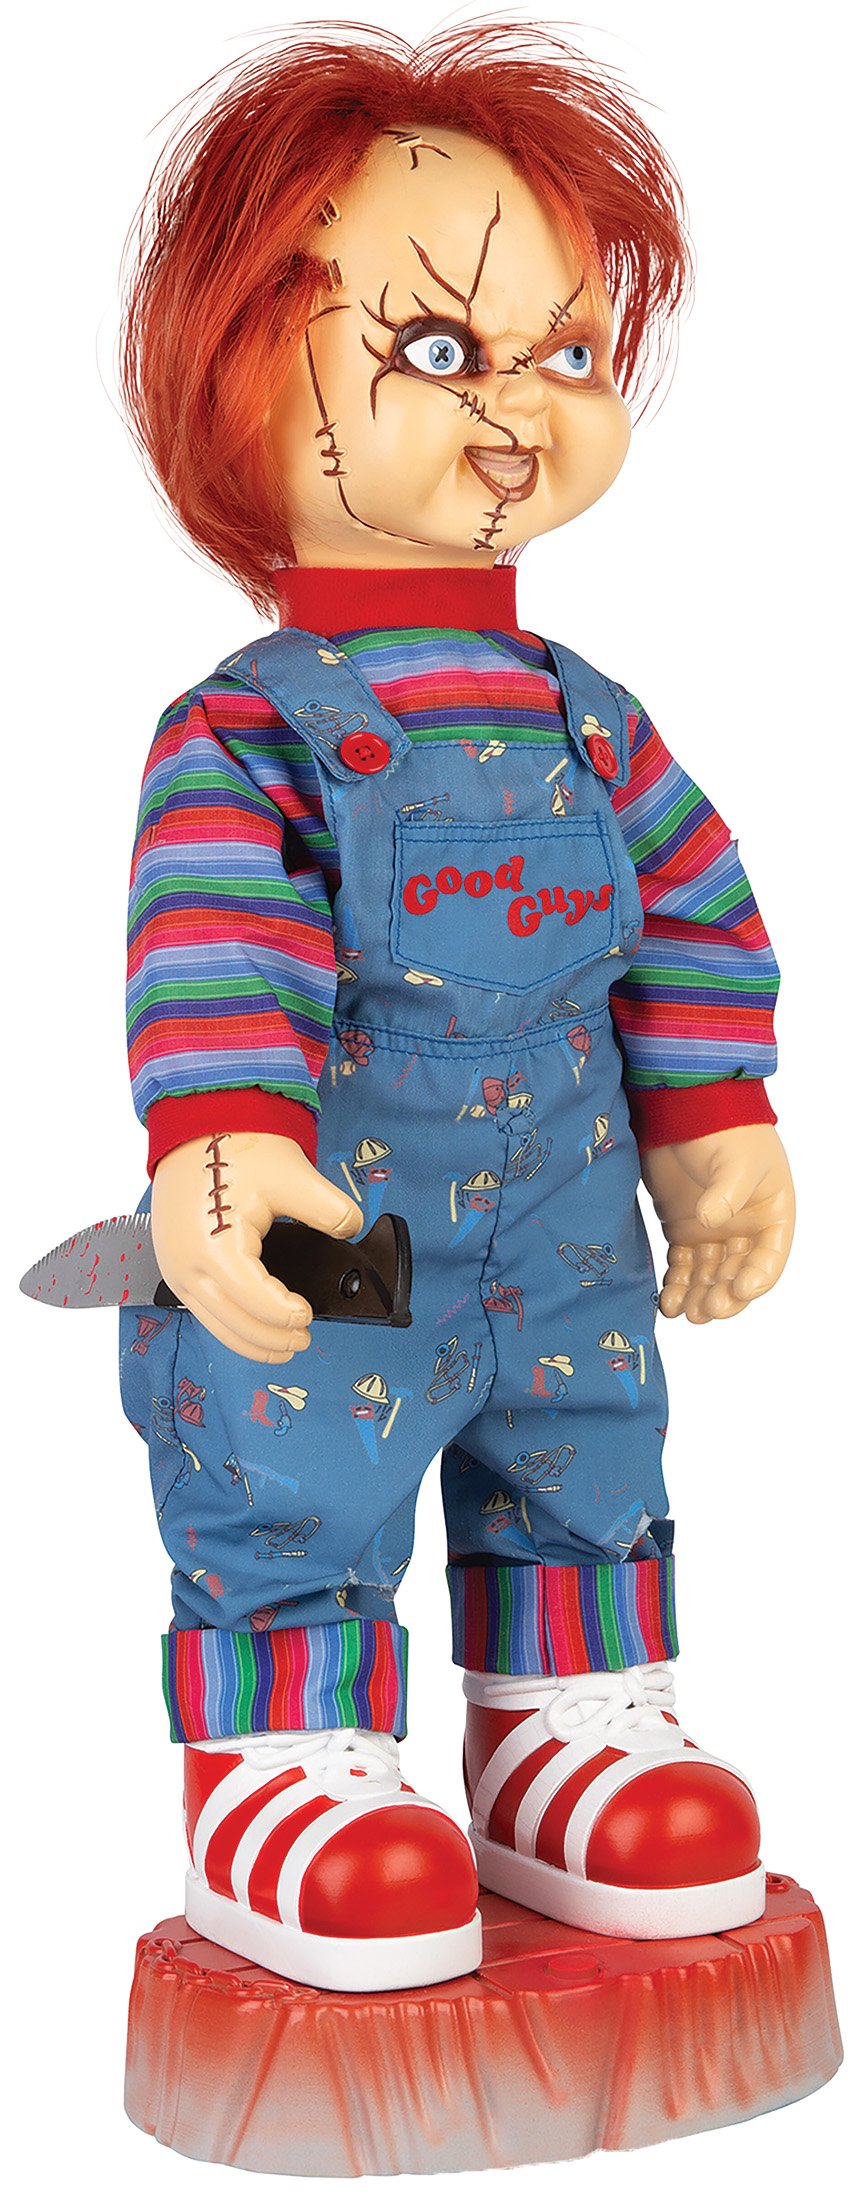 Animated Life-Size Chucky